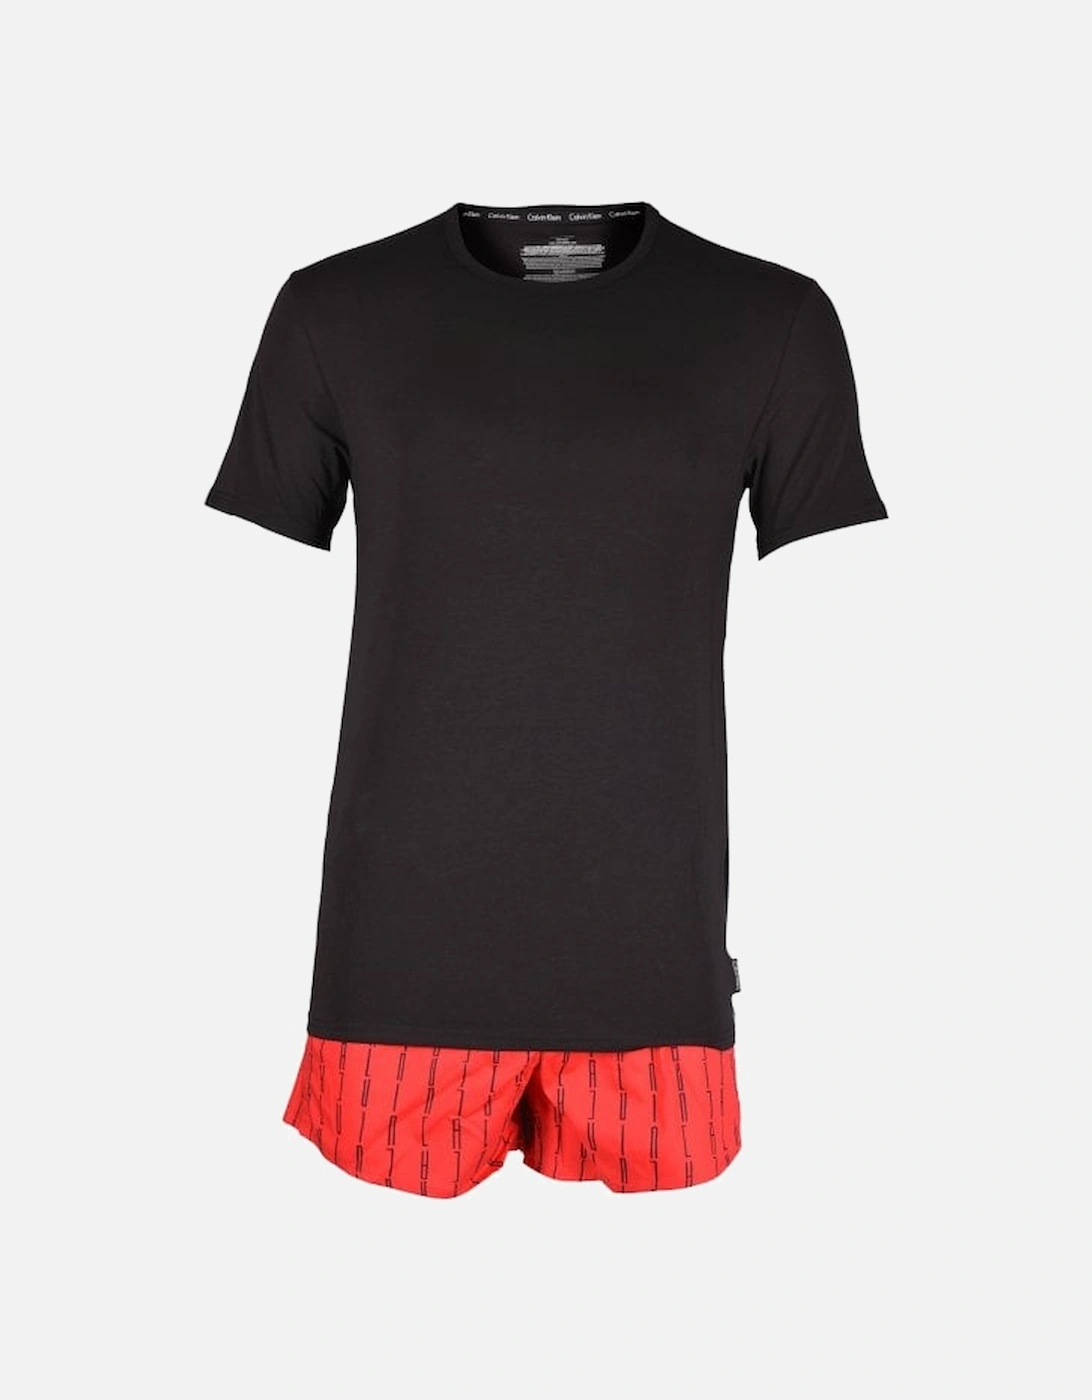 T-Shirt & Boxers Gift Set, Black/Red